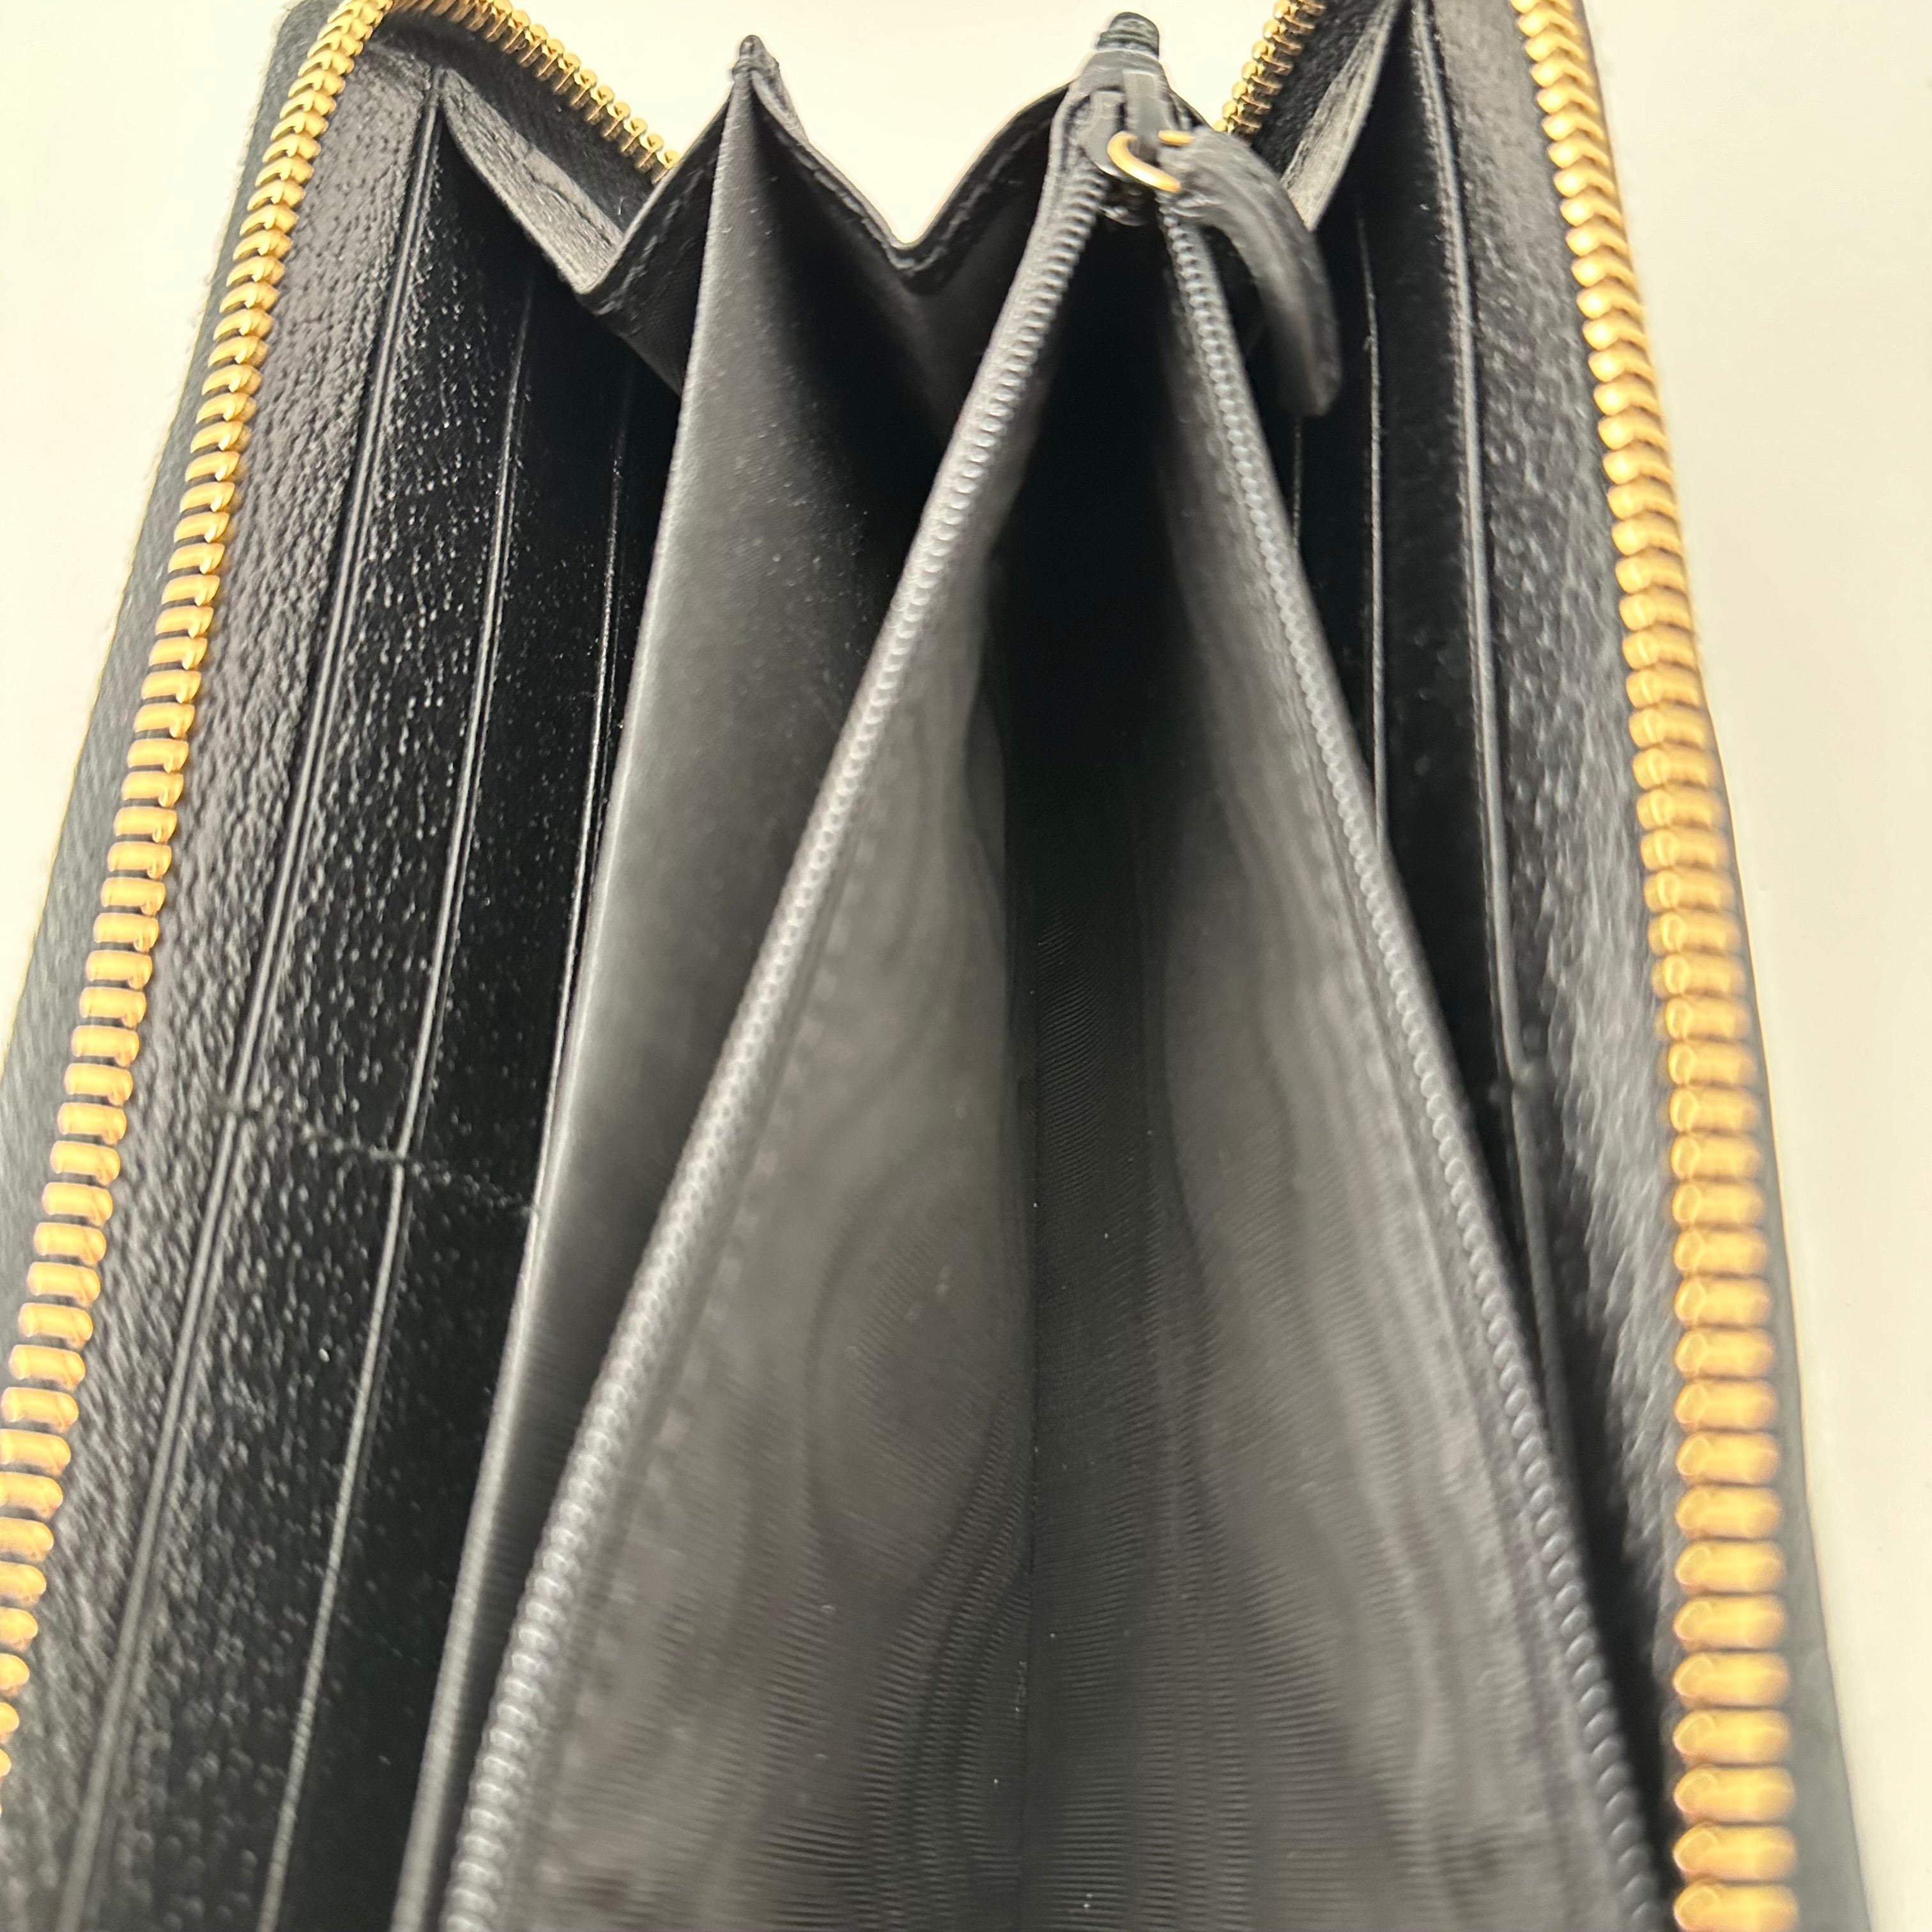 Black Ophidia Wallet